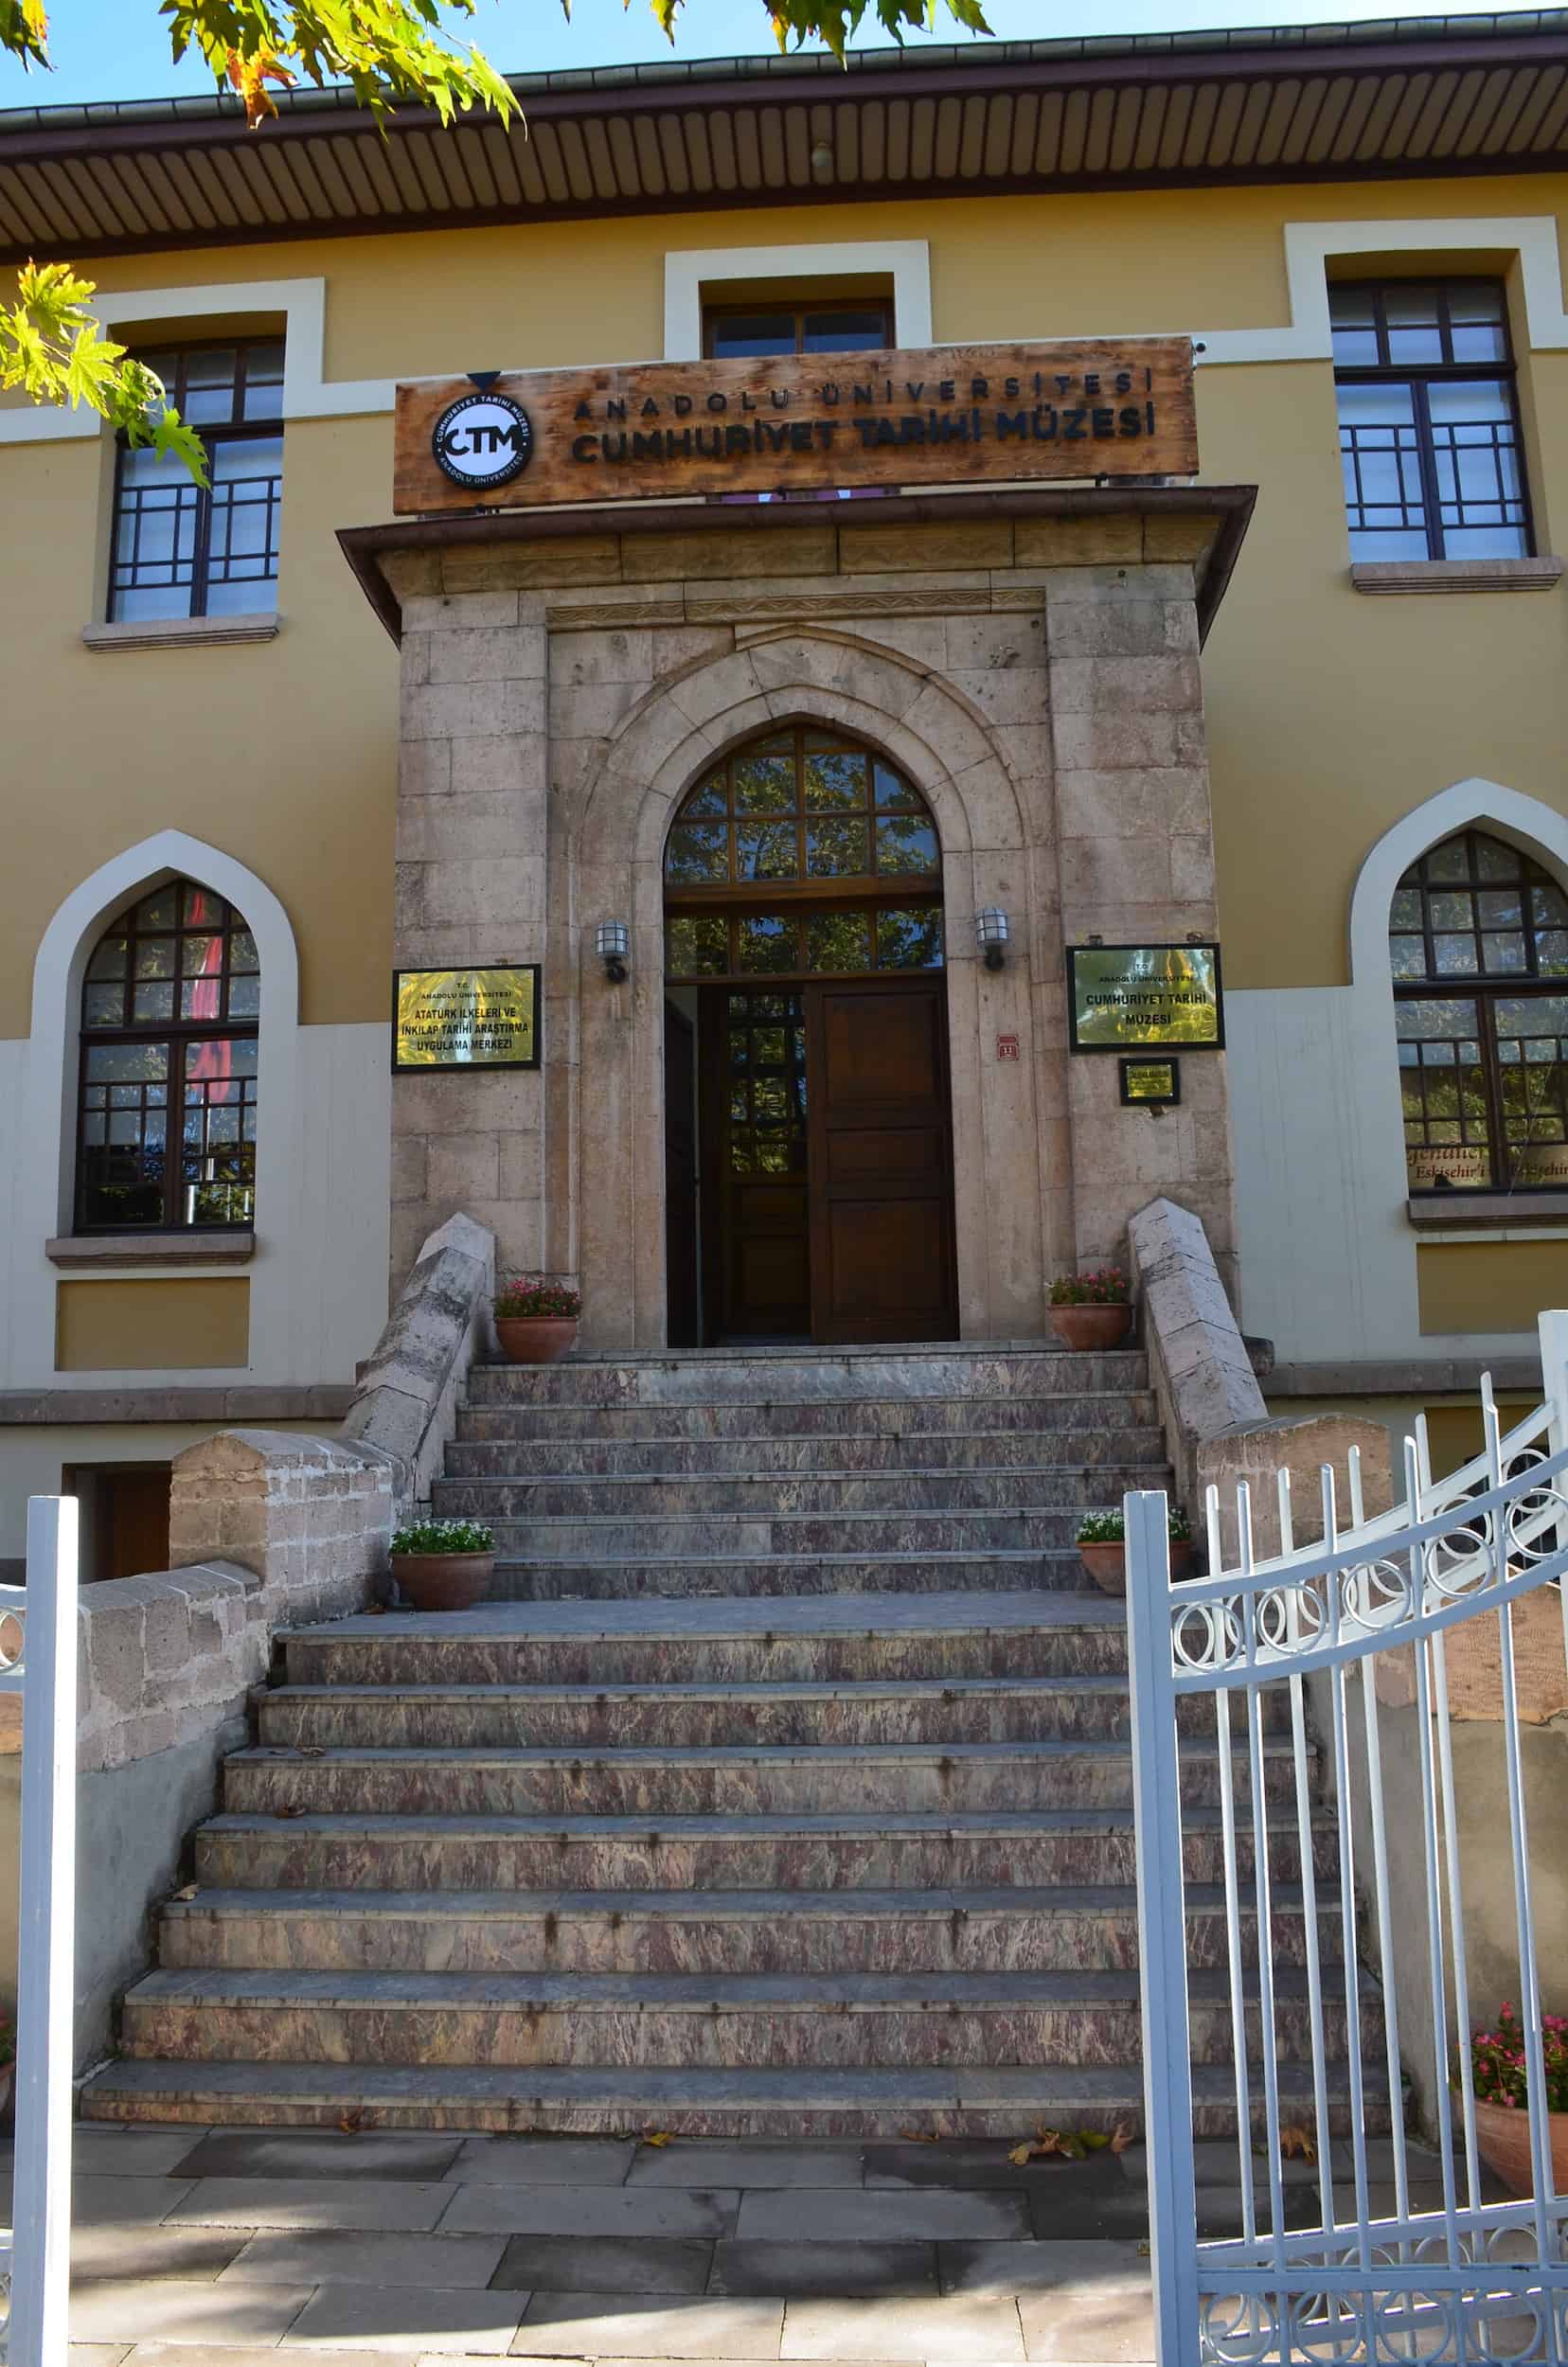 Entrance to the Anadolu University Republic History Museum